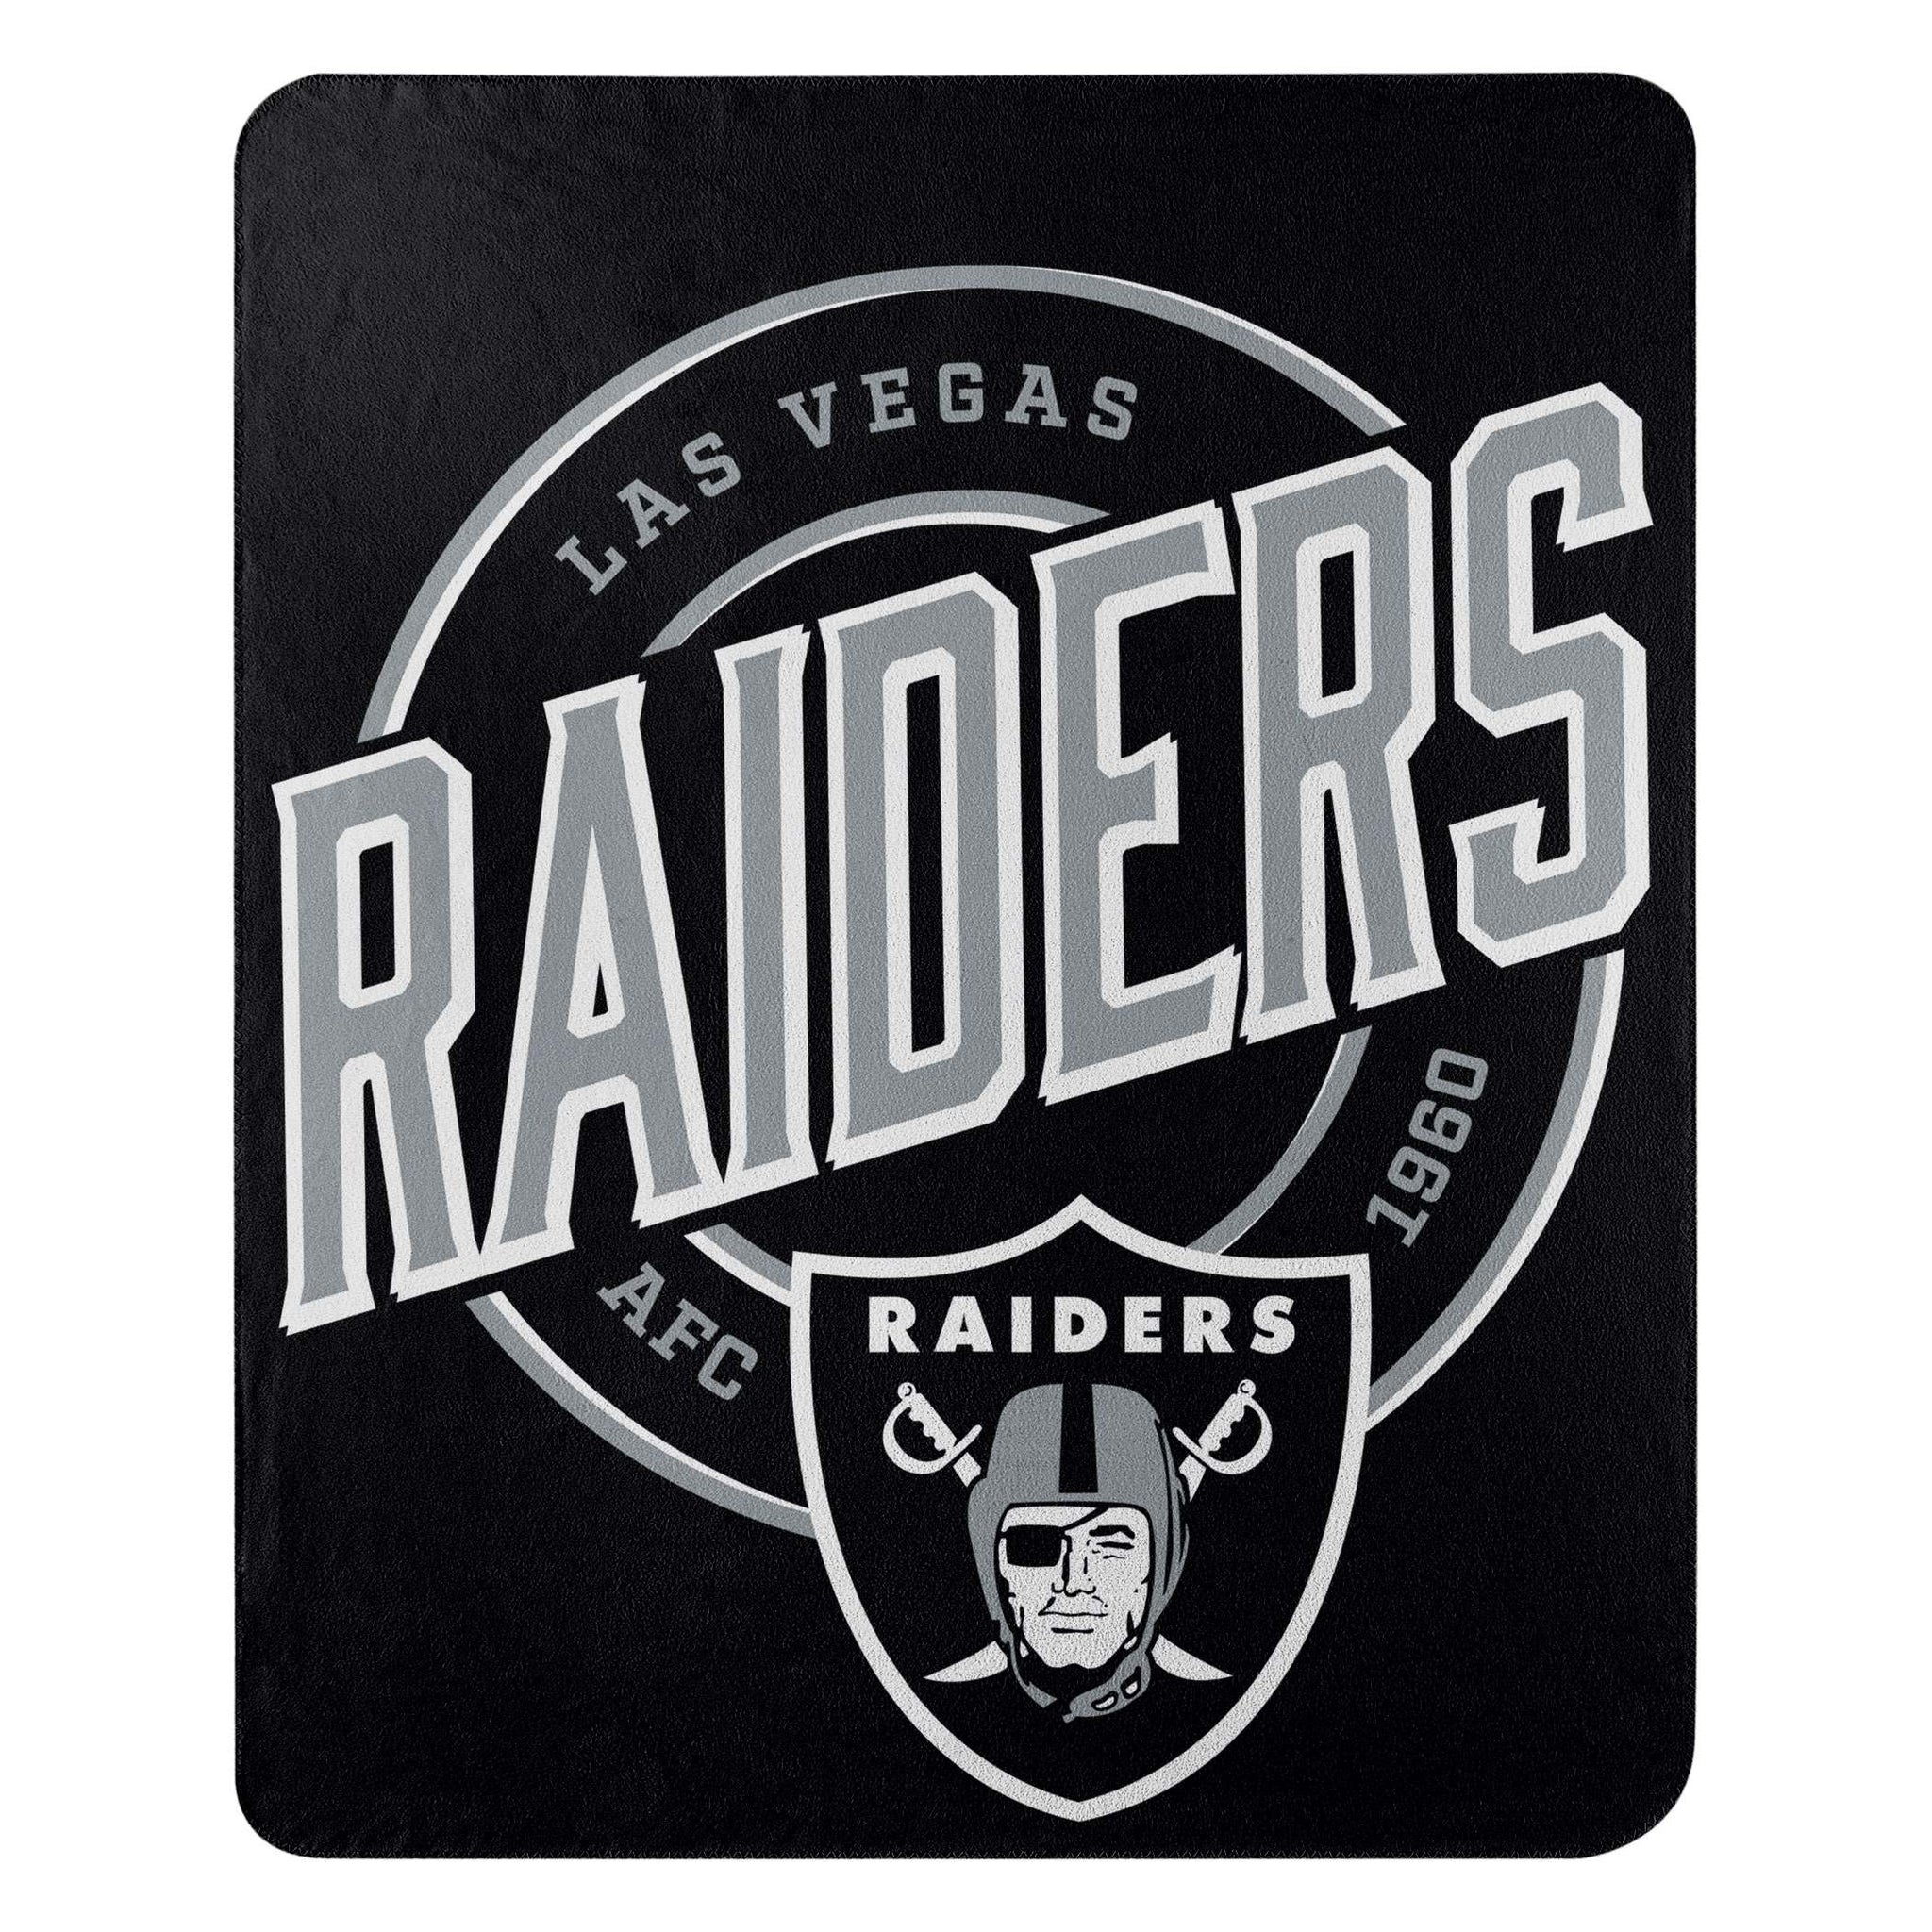 Las Vegas Raiders Blanket 50x60 Fleece Campaign Design - Team Spirit Store USA 